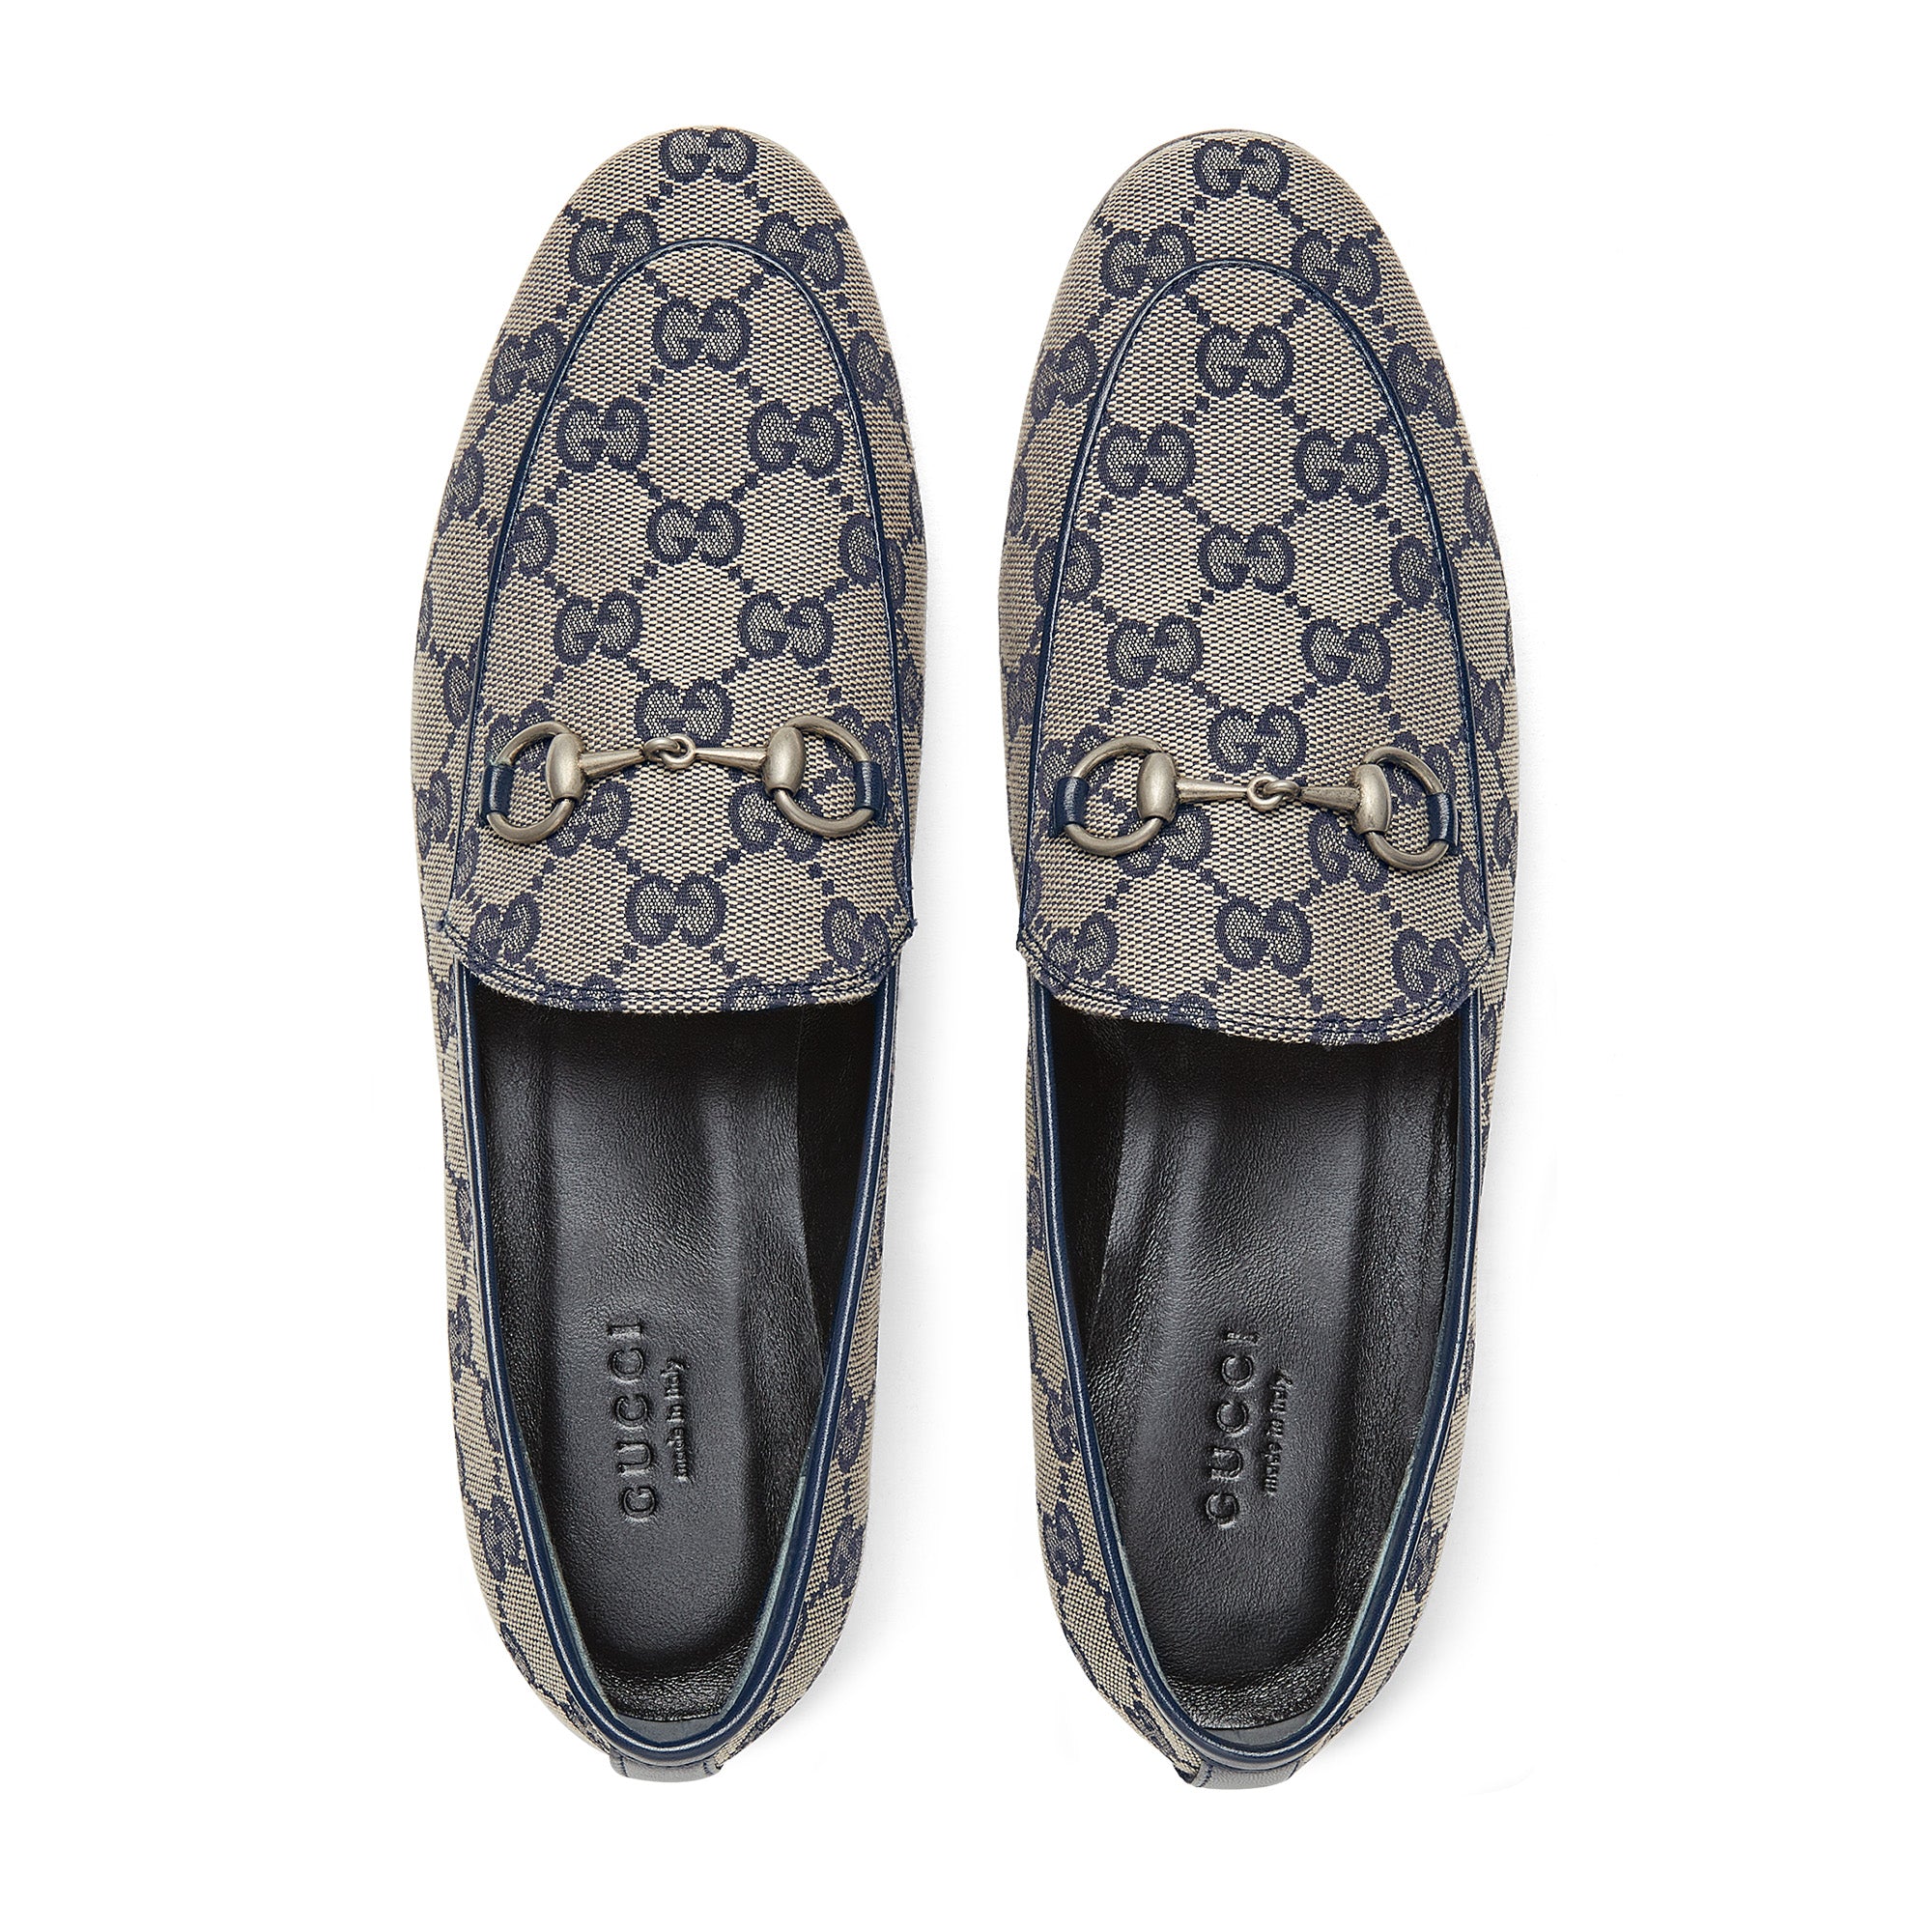 Gucci - Women’s New Jordaan Loafer - (Beige/Blue) view 2